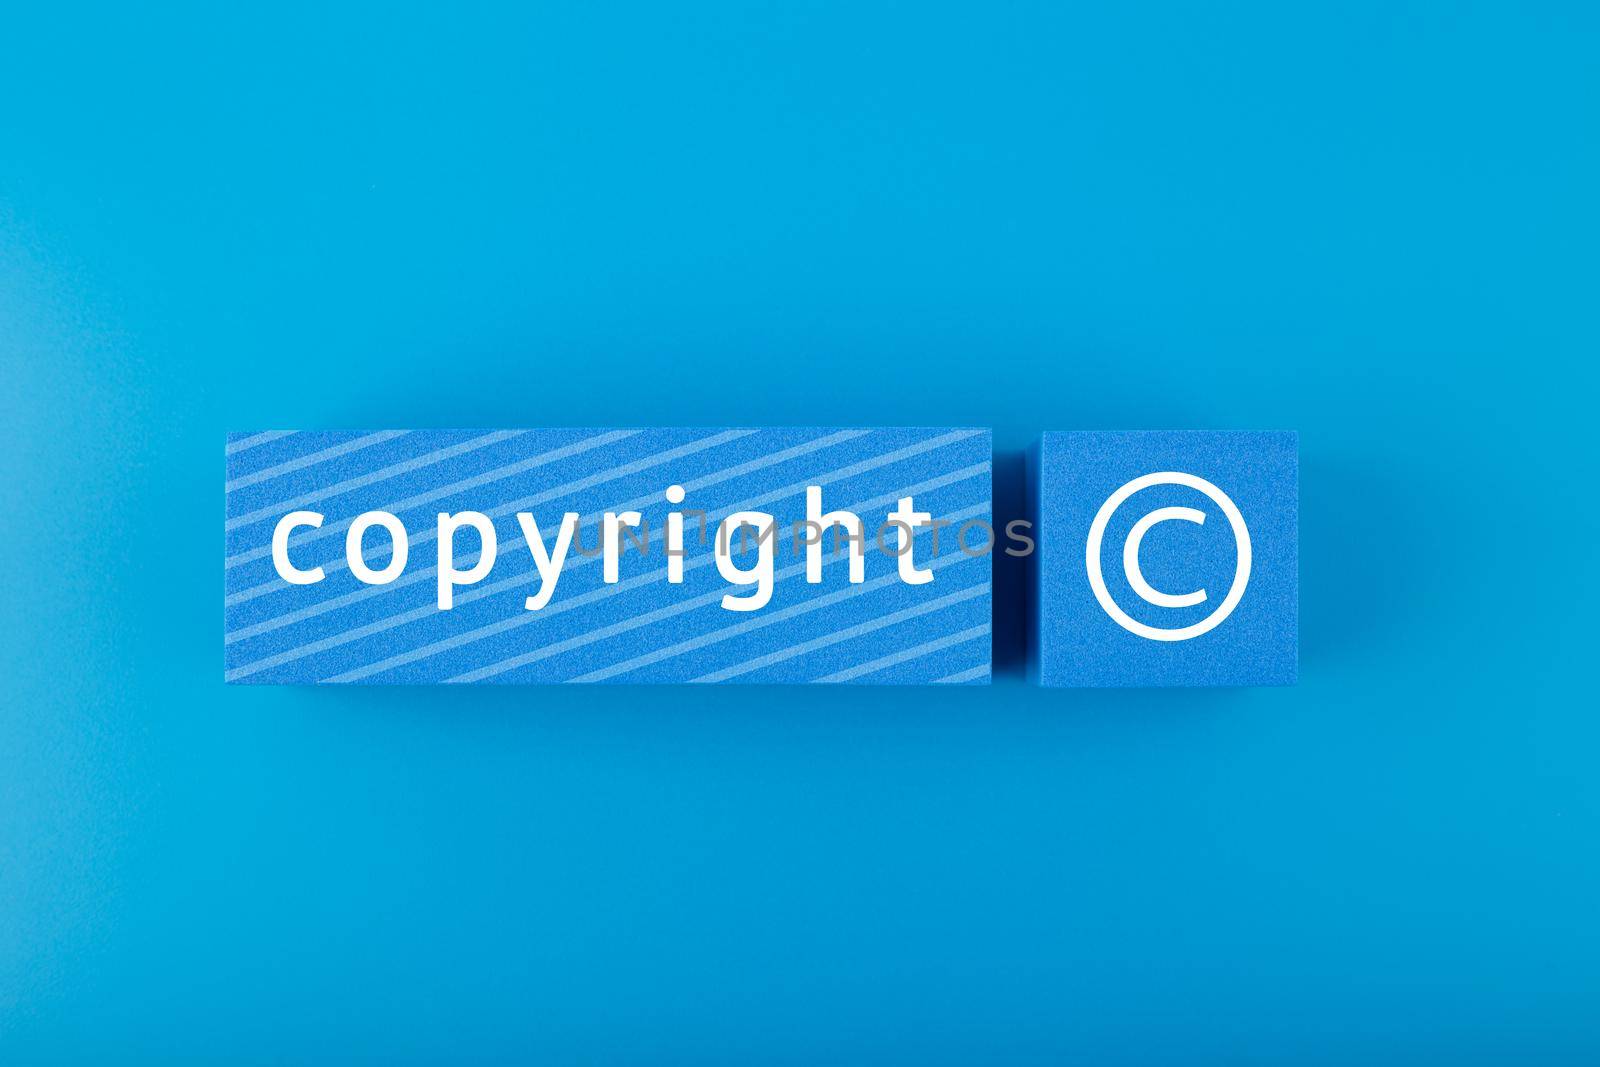 Minimal copyright protection concept on blue background by Senorina_Irina